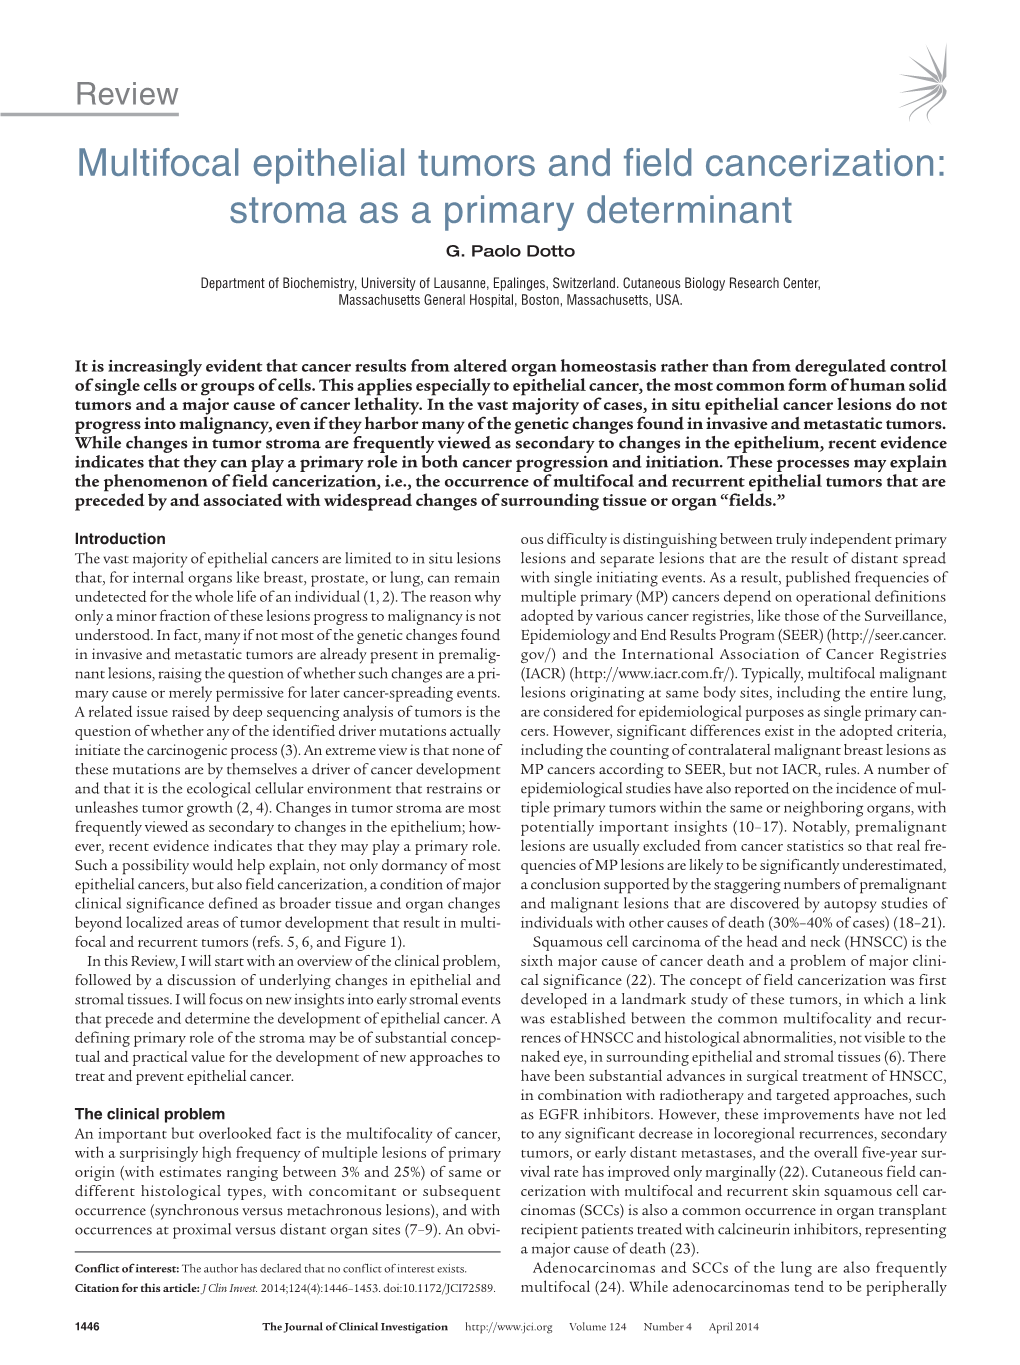 Stroma As a Primary Determinant G